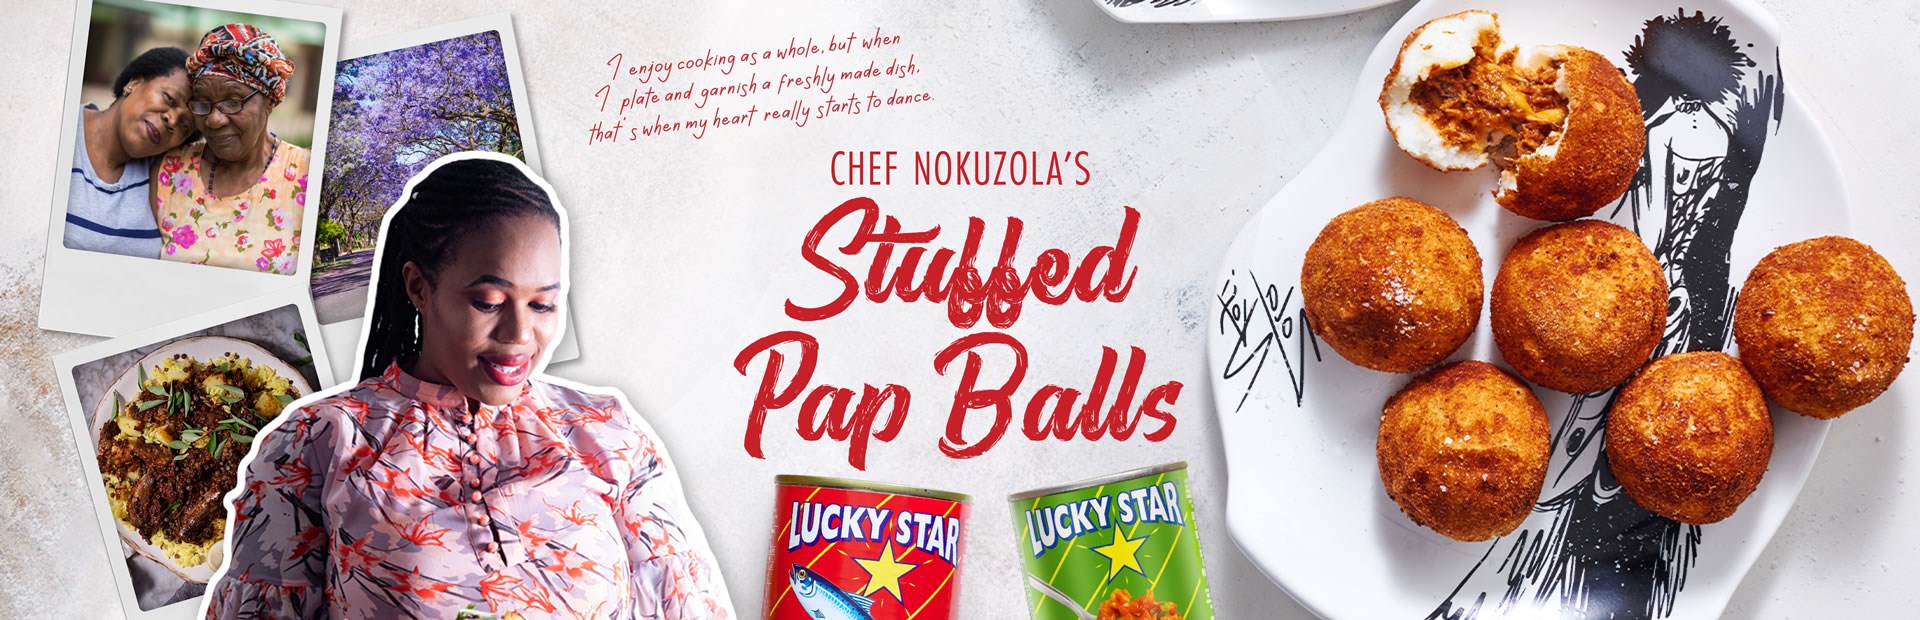 CHEF NOKUZOLA'S Stuffed Pap Balls